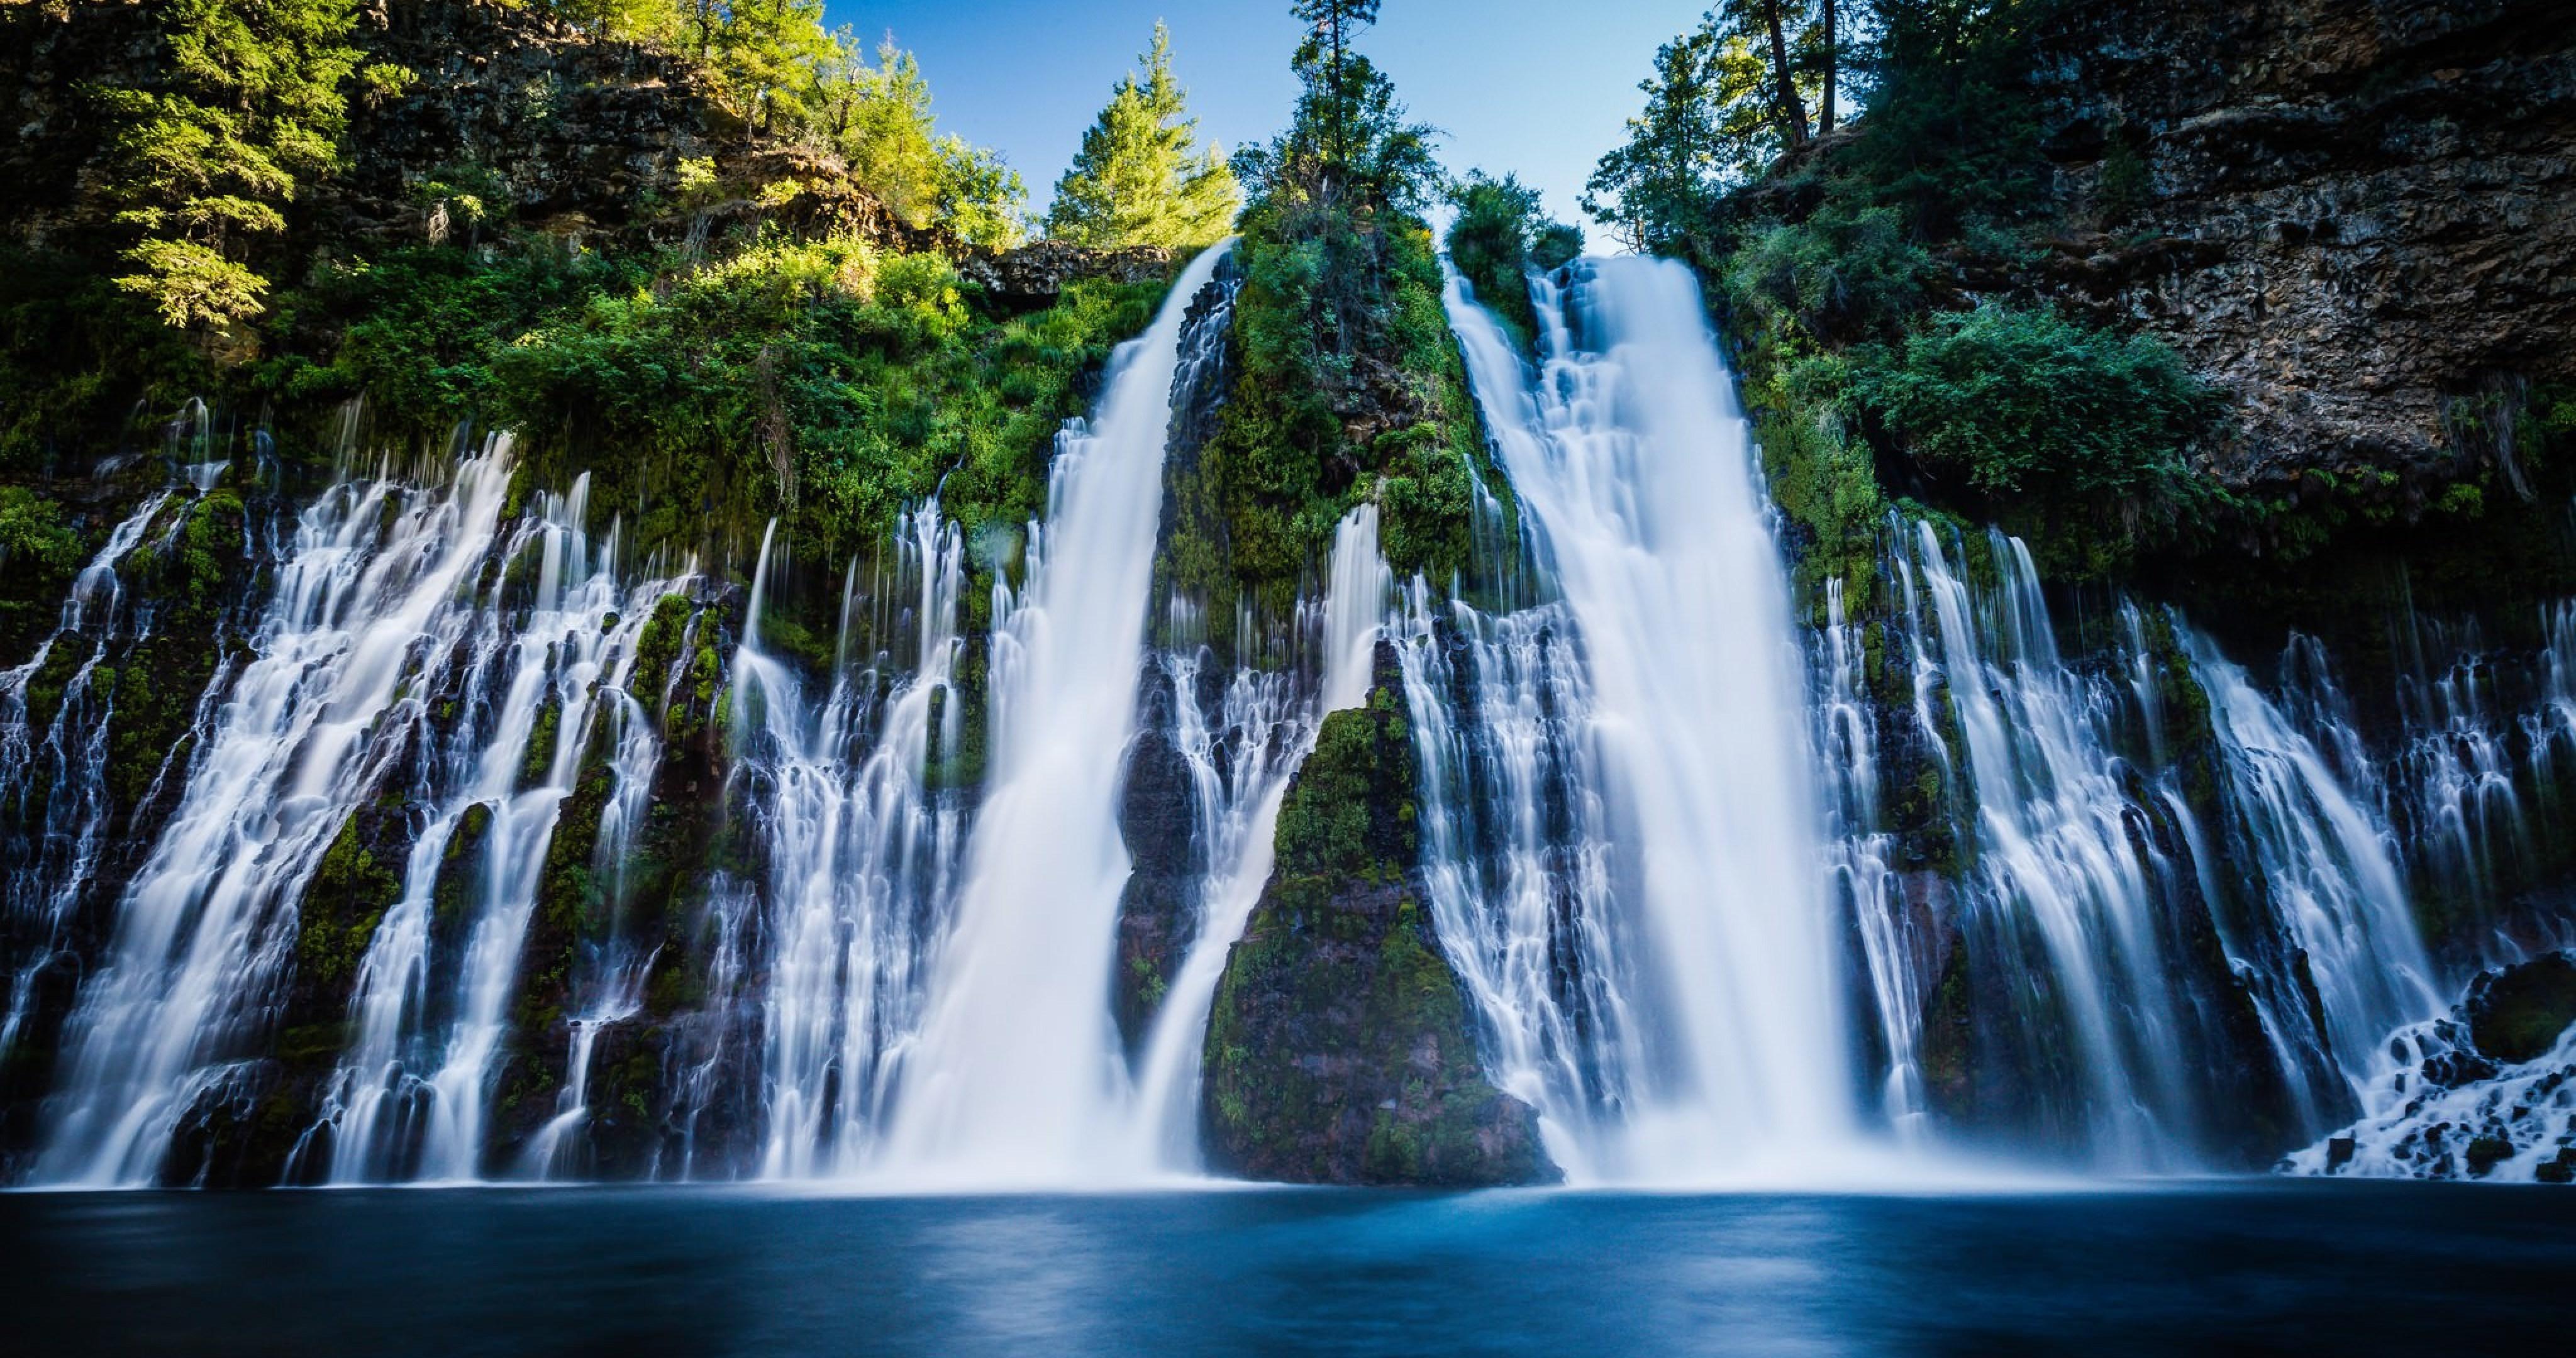 Заставка на телефон для женщин природа. Водопад Аксас. Хайфорс водопад. Манзара водопад. Красота воды.